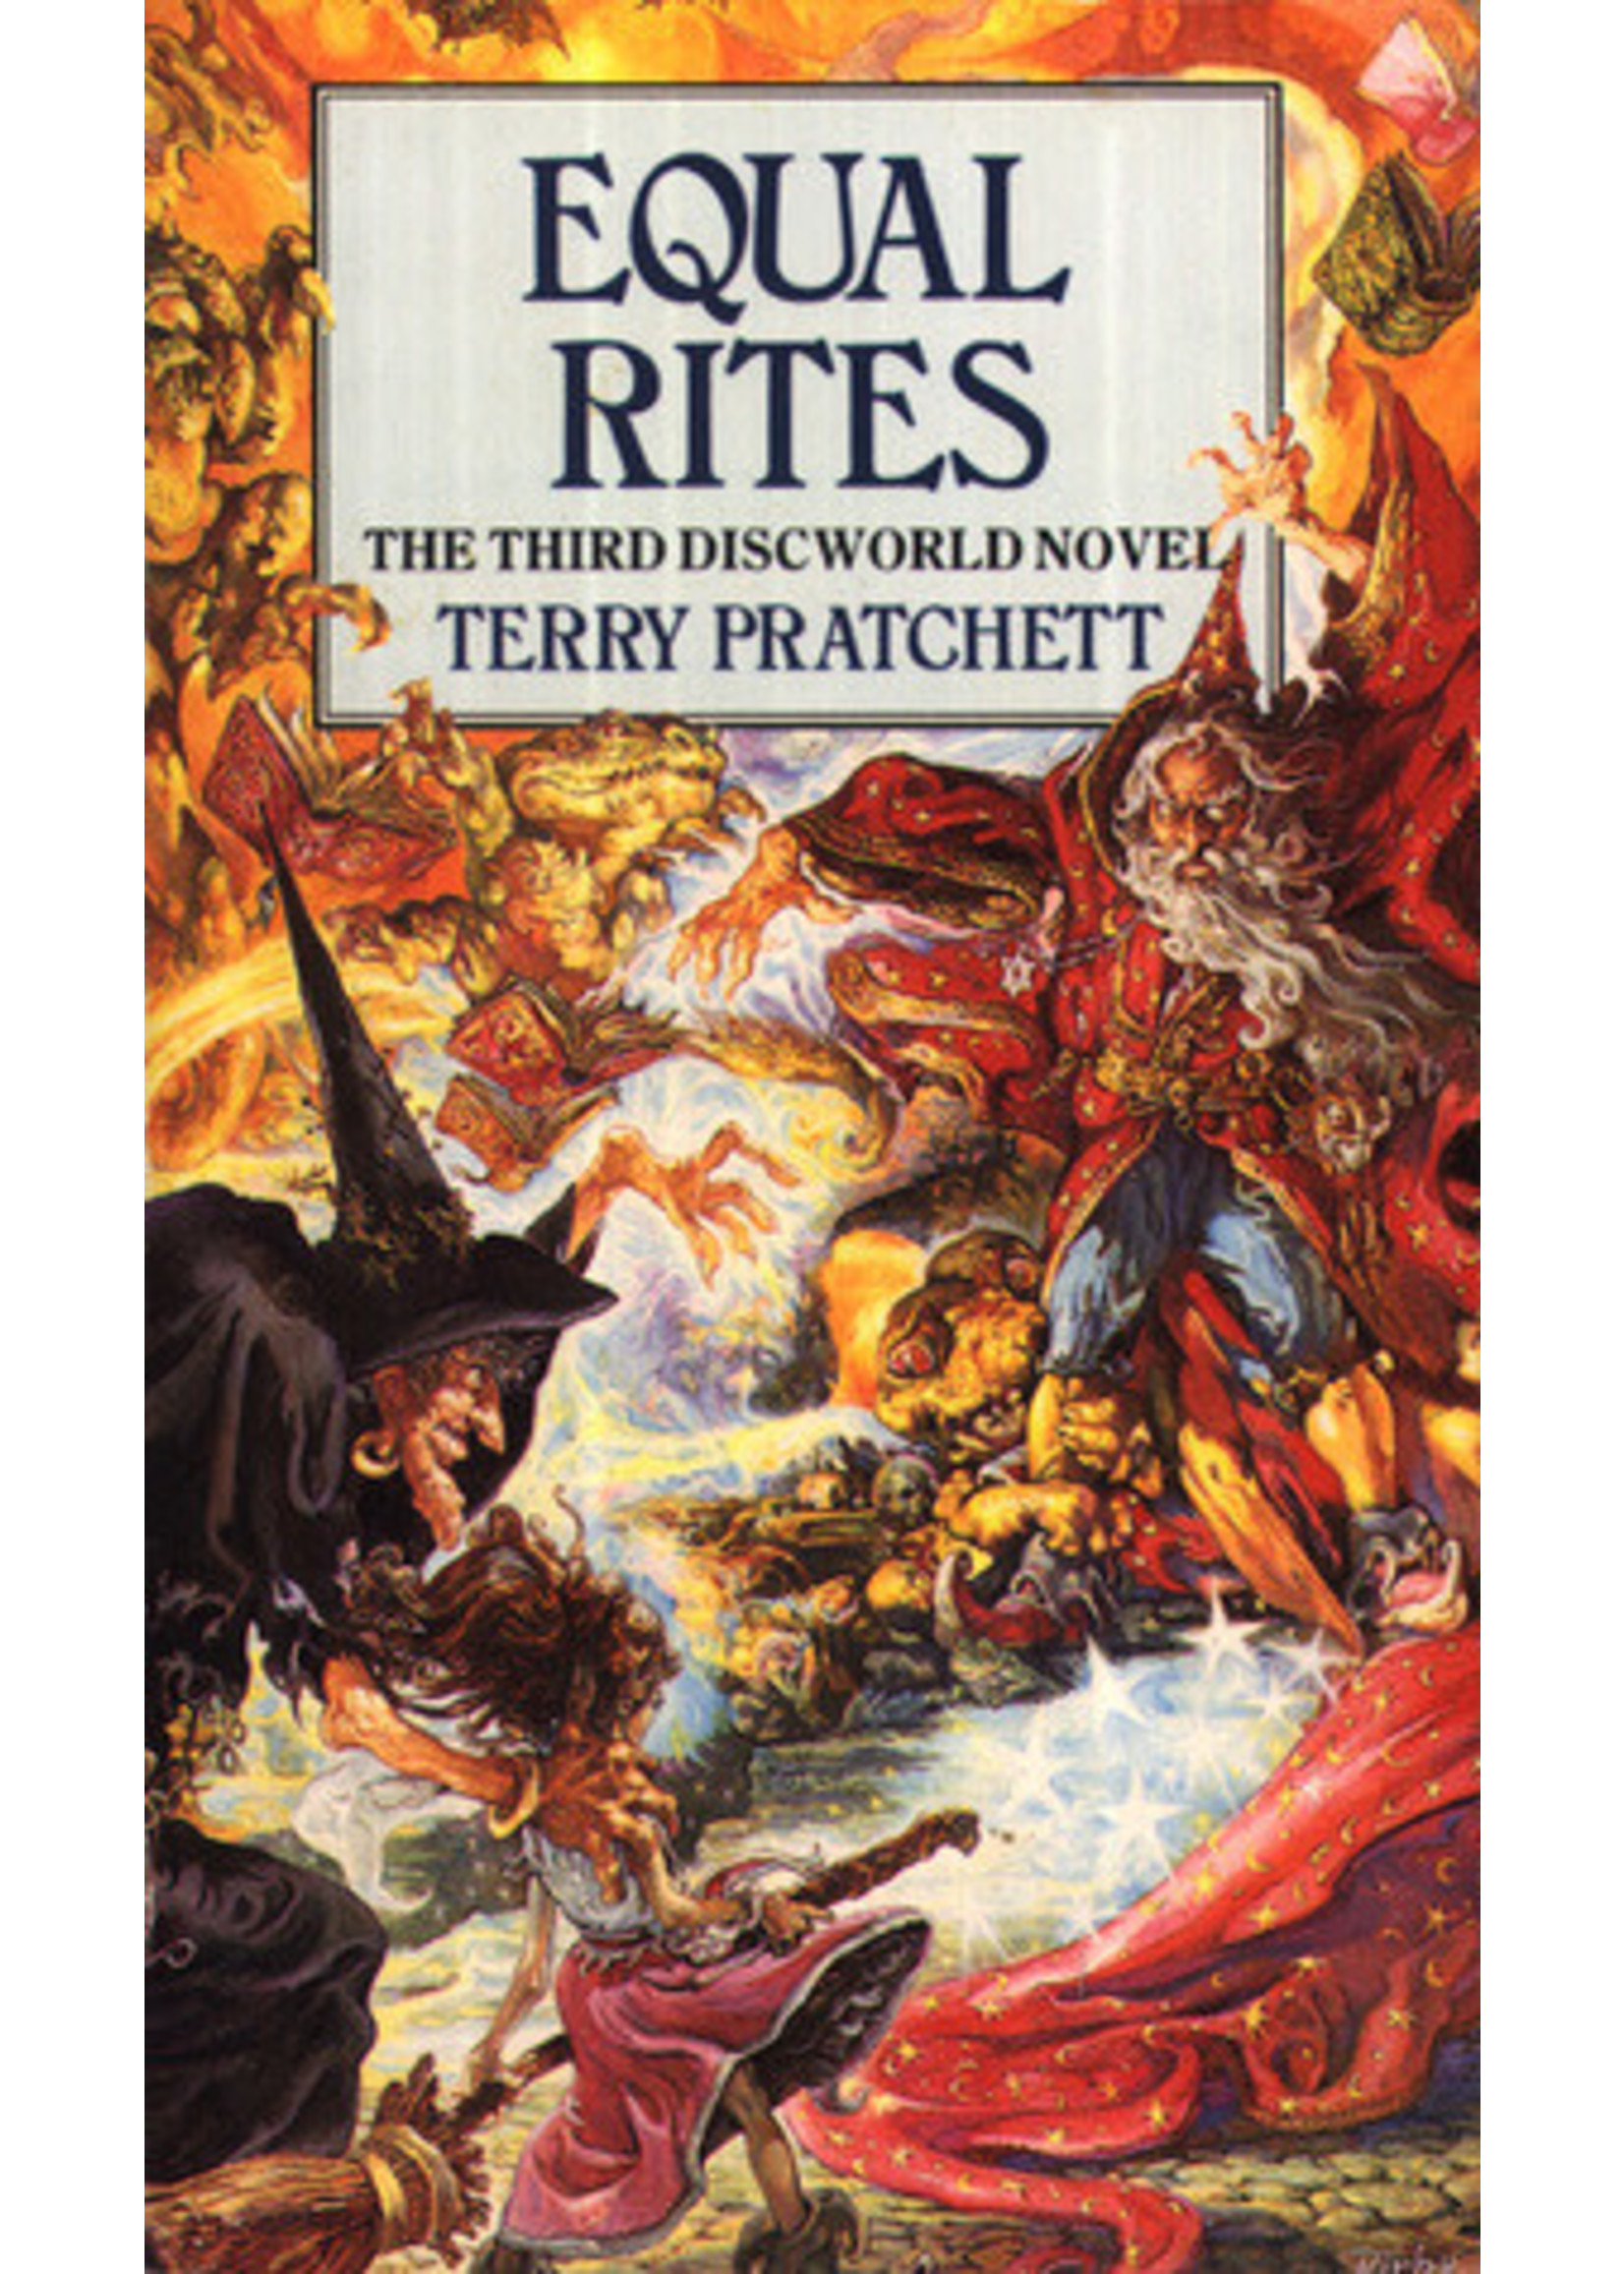 Equal Rites (Discworld #3) by Terry Pratchett